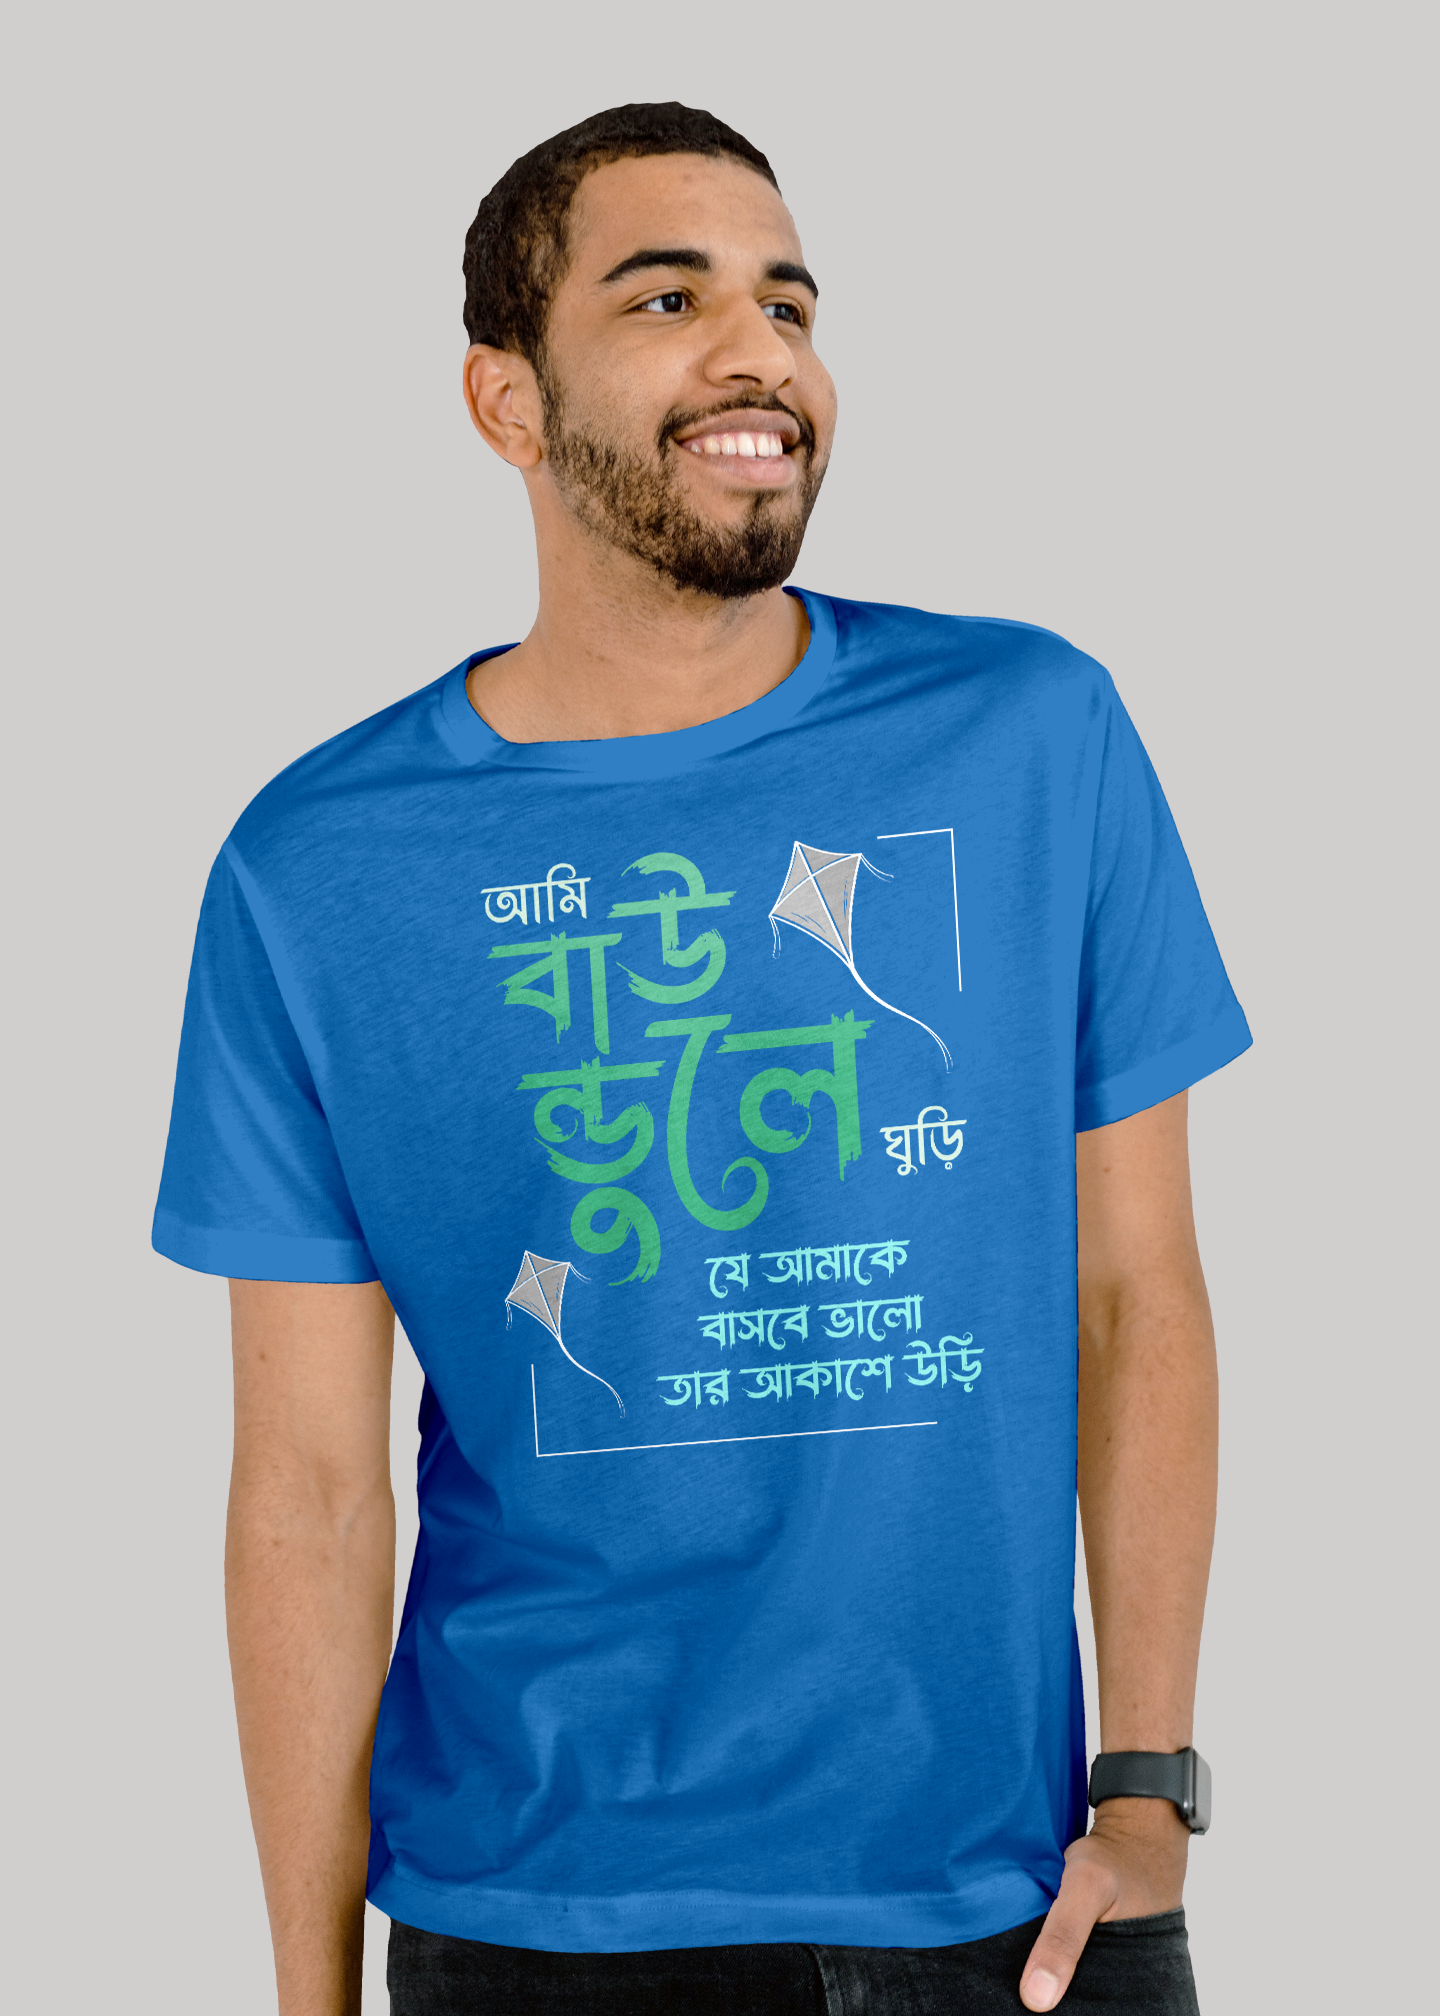 Ami baundule ghuri bengali Printed Half Sleeve Premium Cotton T-shirt For Men